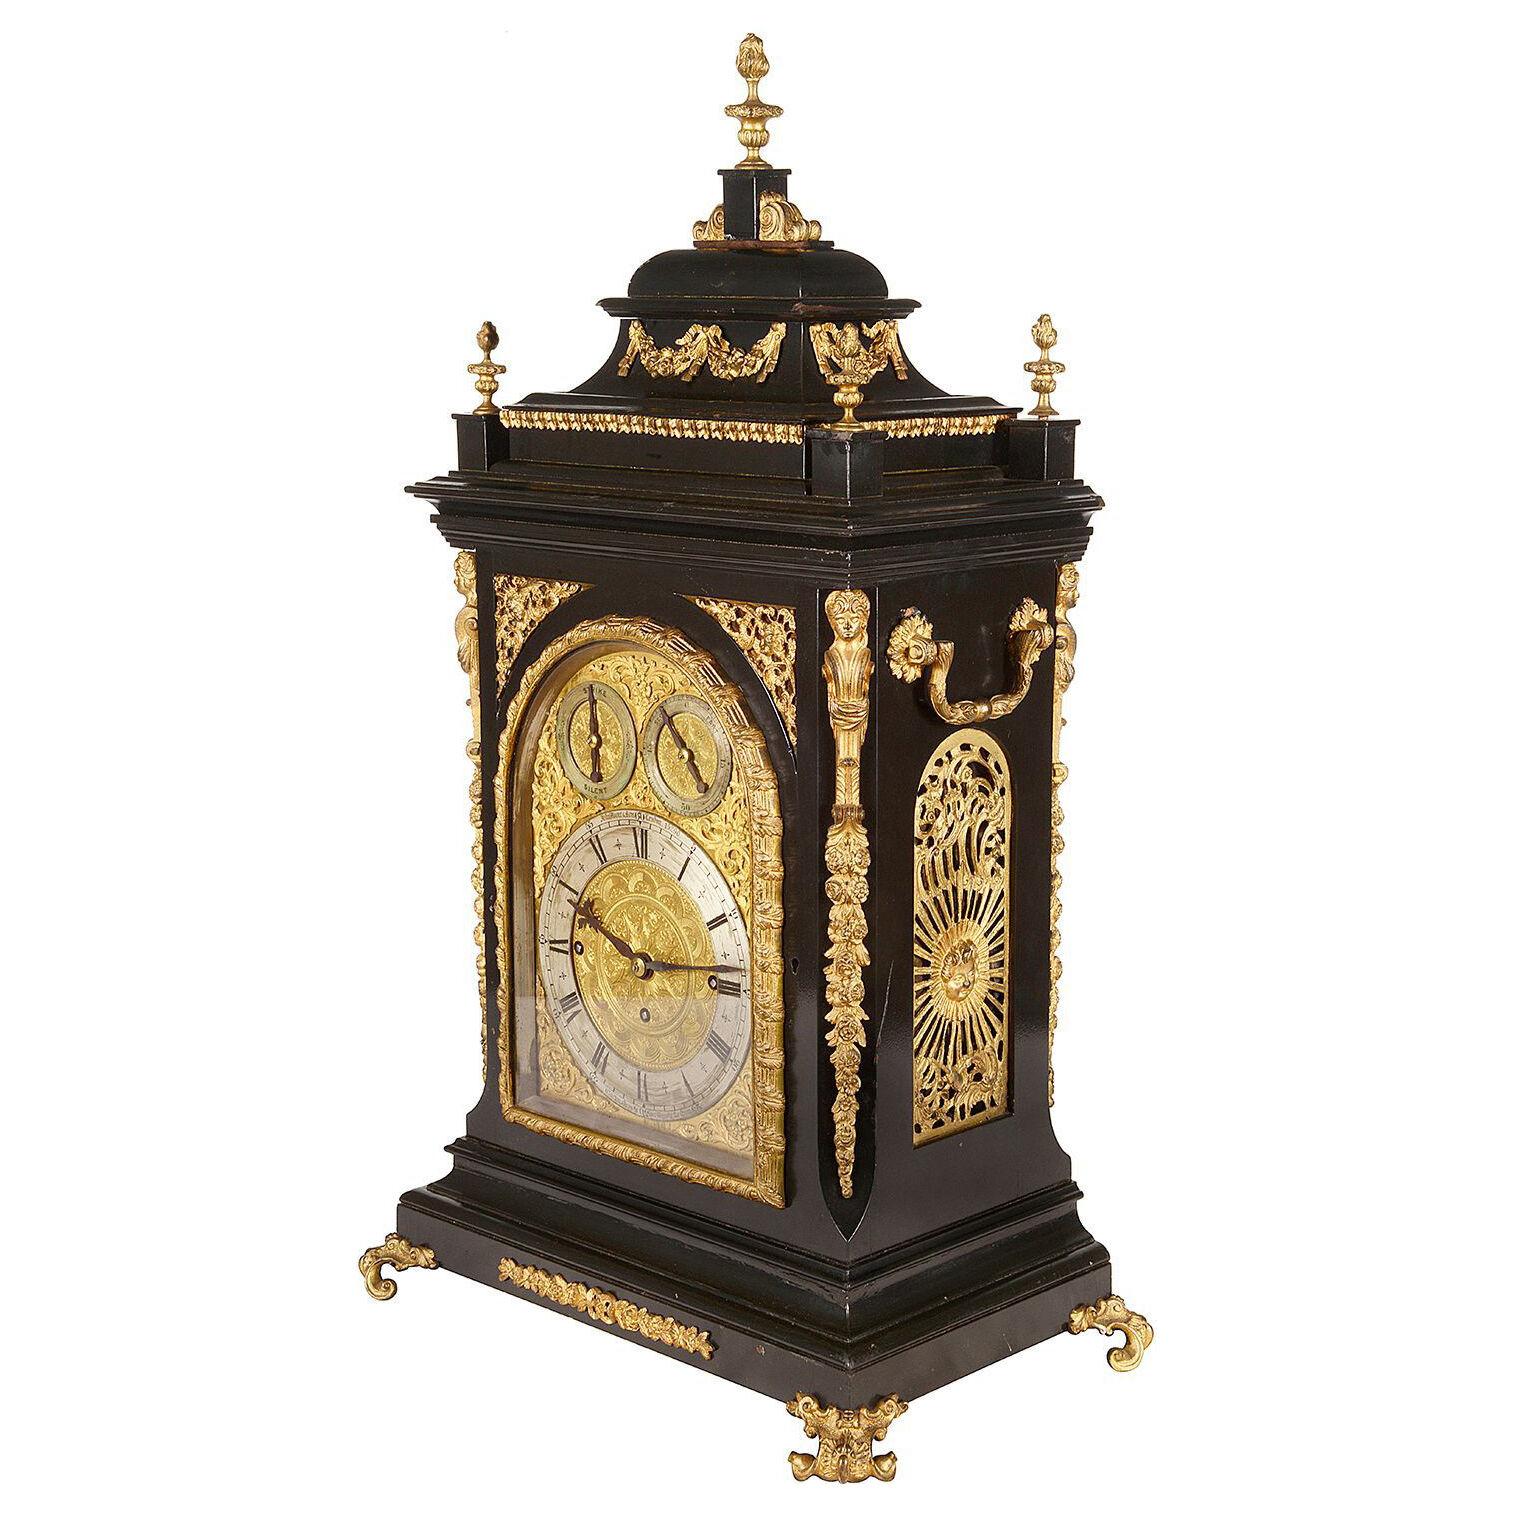 19th Century Westminster chiming bracket clock.